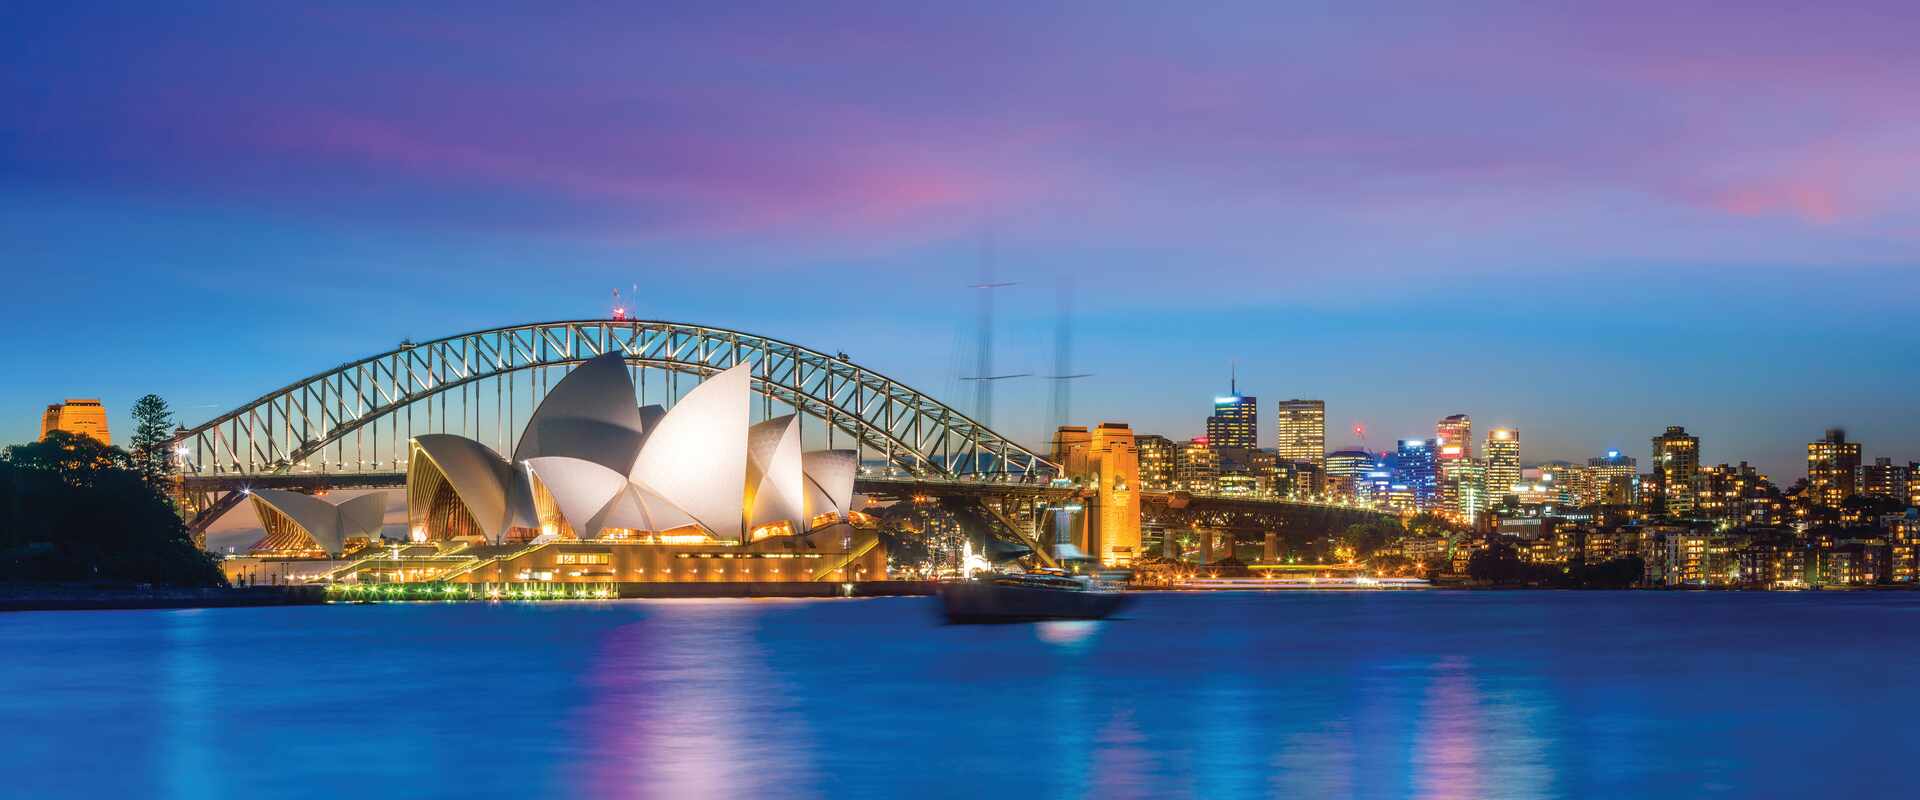 sydney opera house and bridge by night new south wales australia